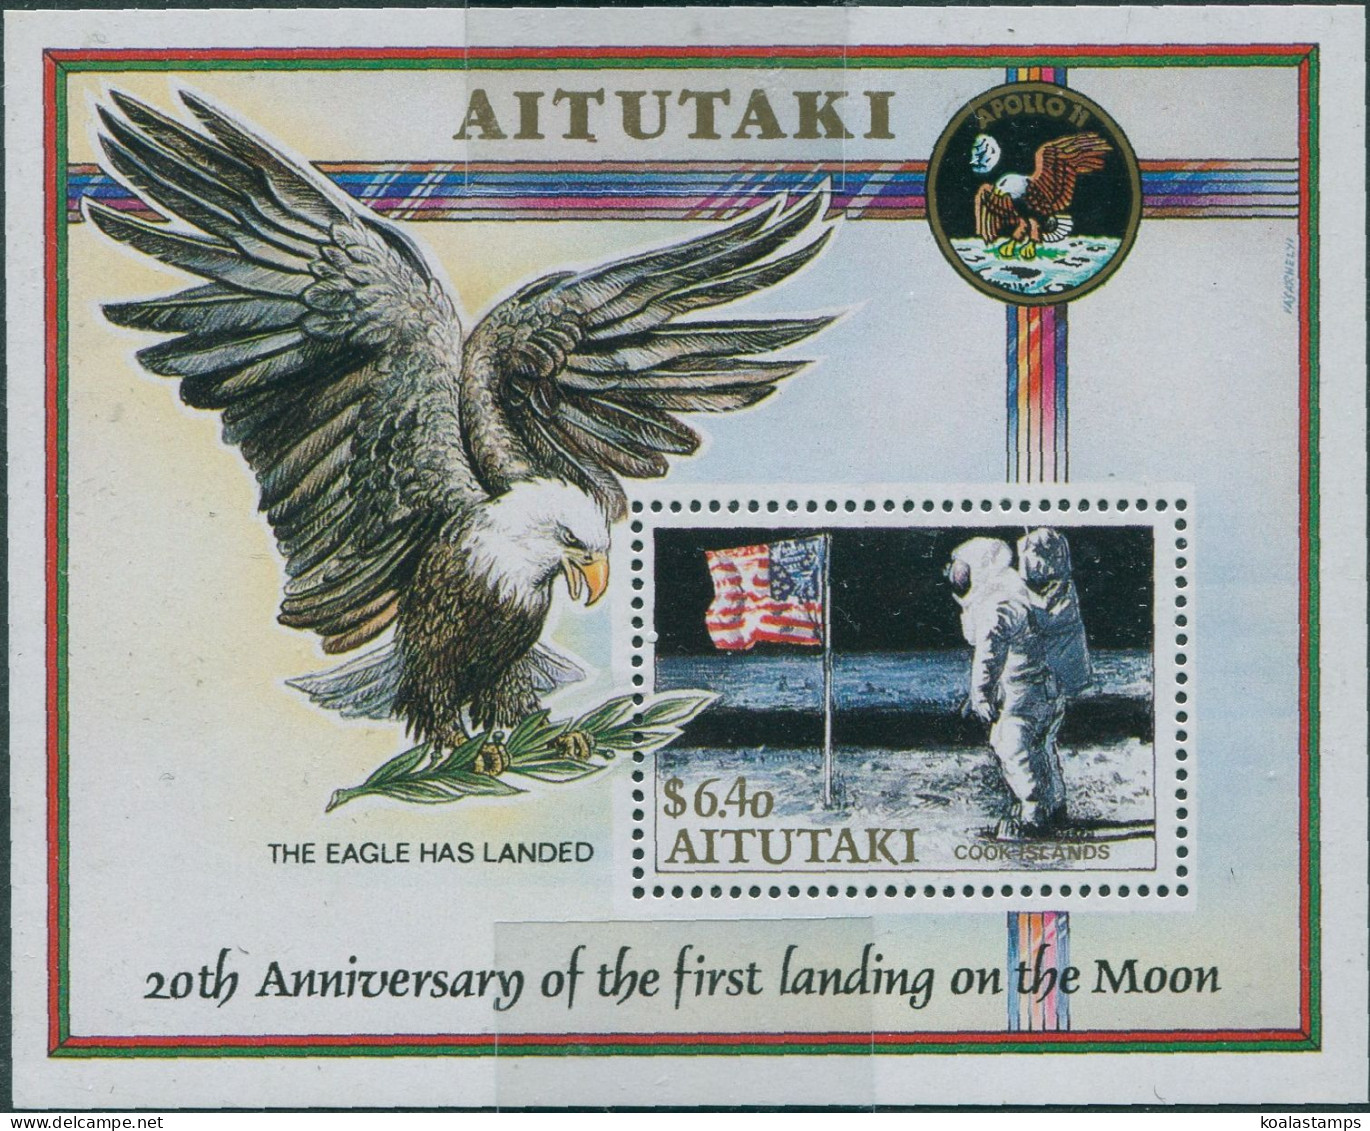 Aitutaki 1989 SG605 Moon Landing MS MNH - Cook Islands